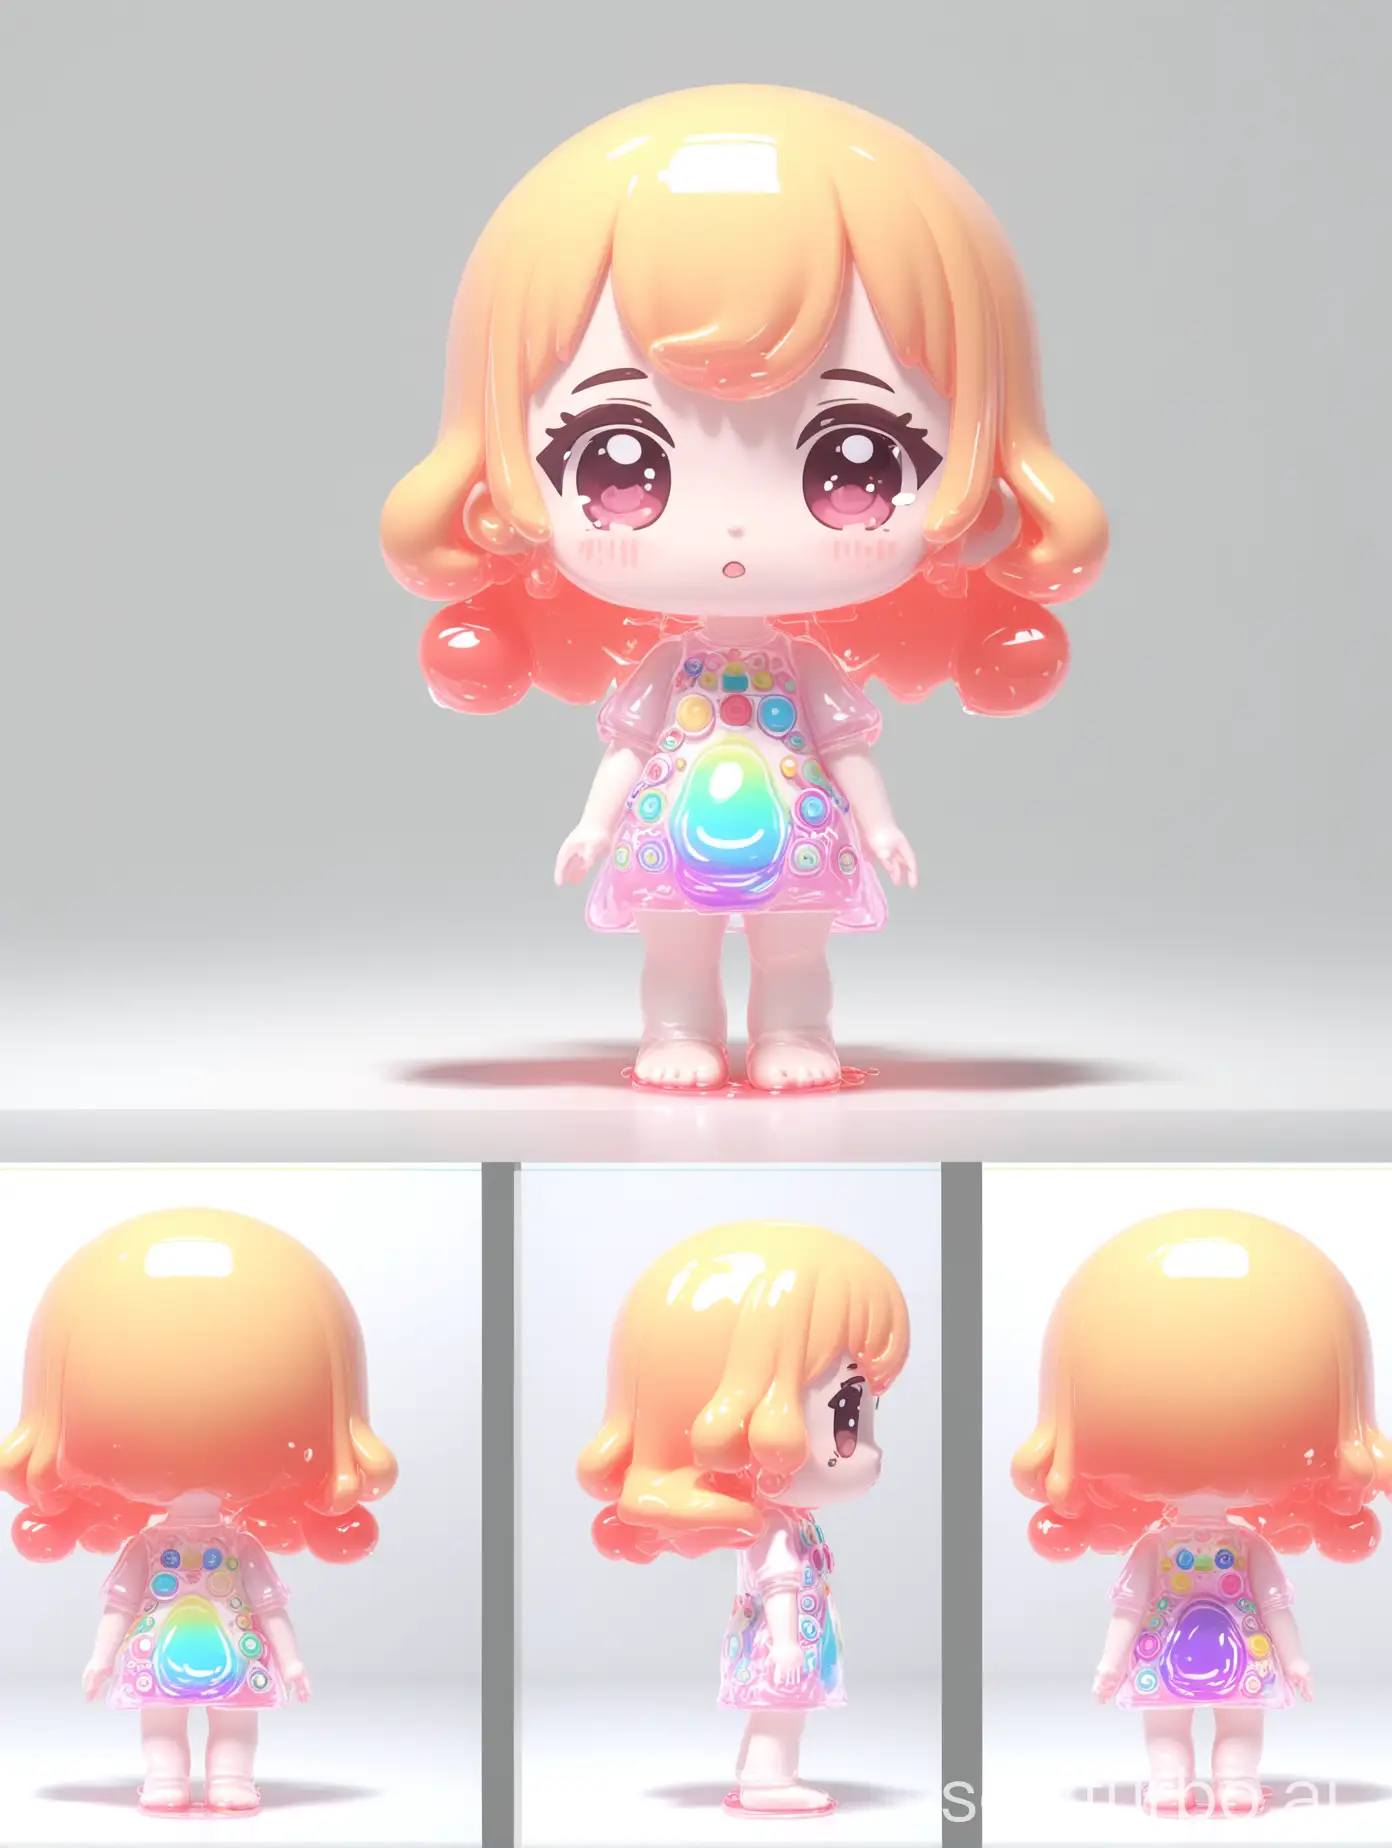 Liquid-Multicolor-Cute-Little-Girl-3D-Rendering-Full-Body-Chibi-Design